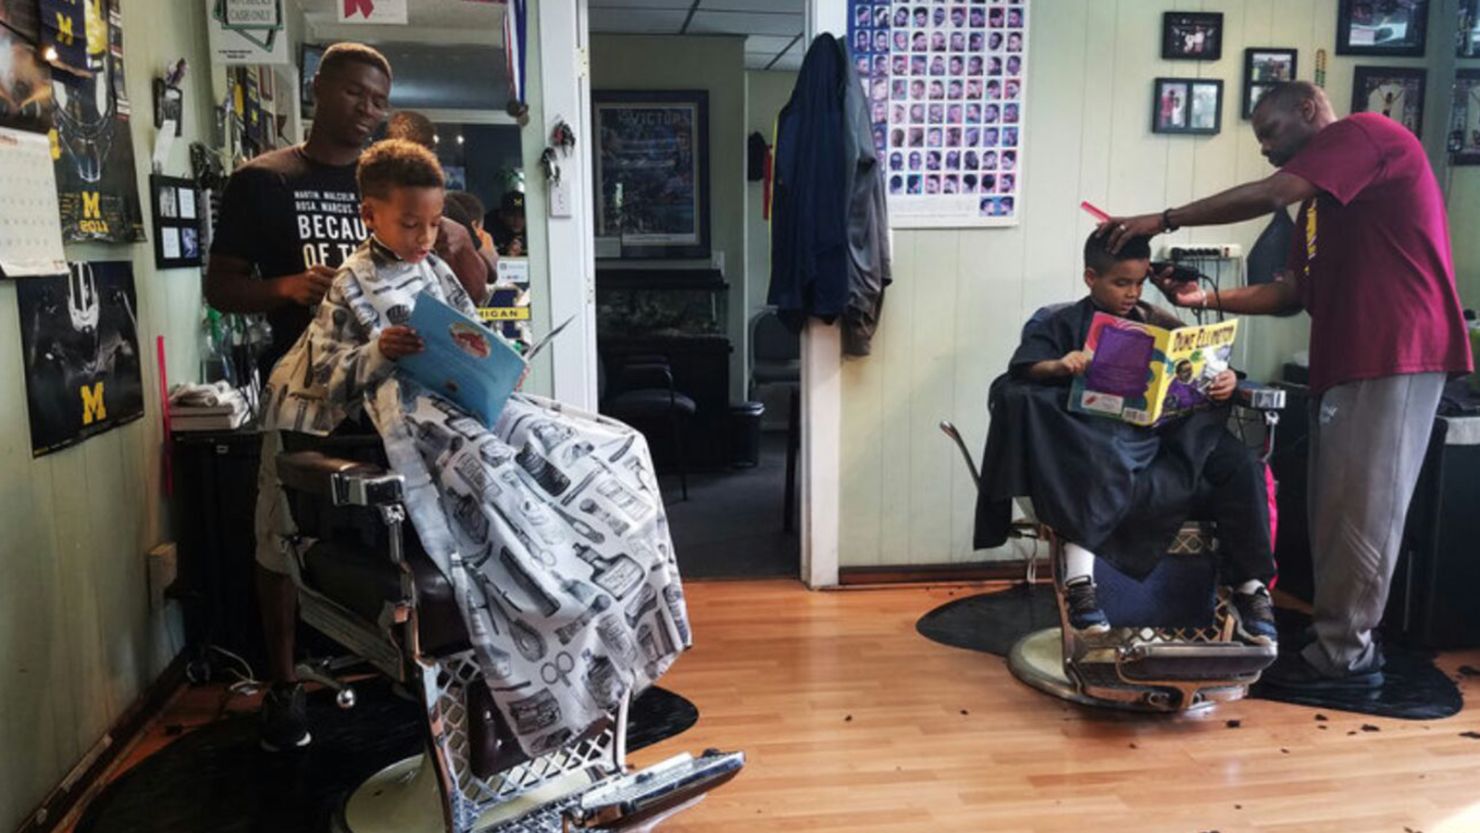 06 Barbershop discount kids read